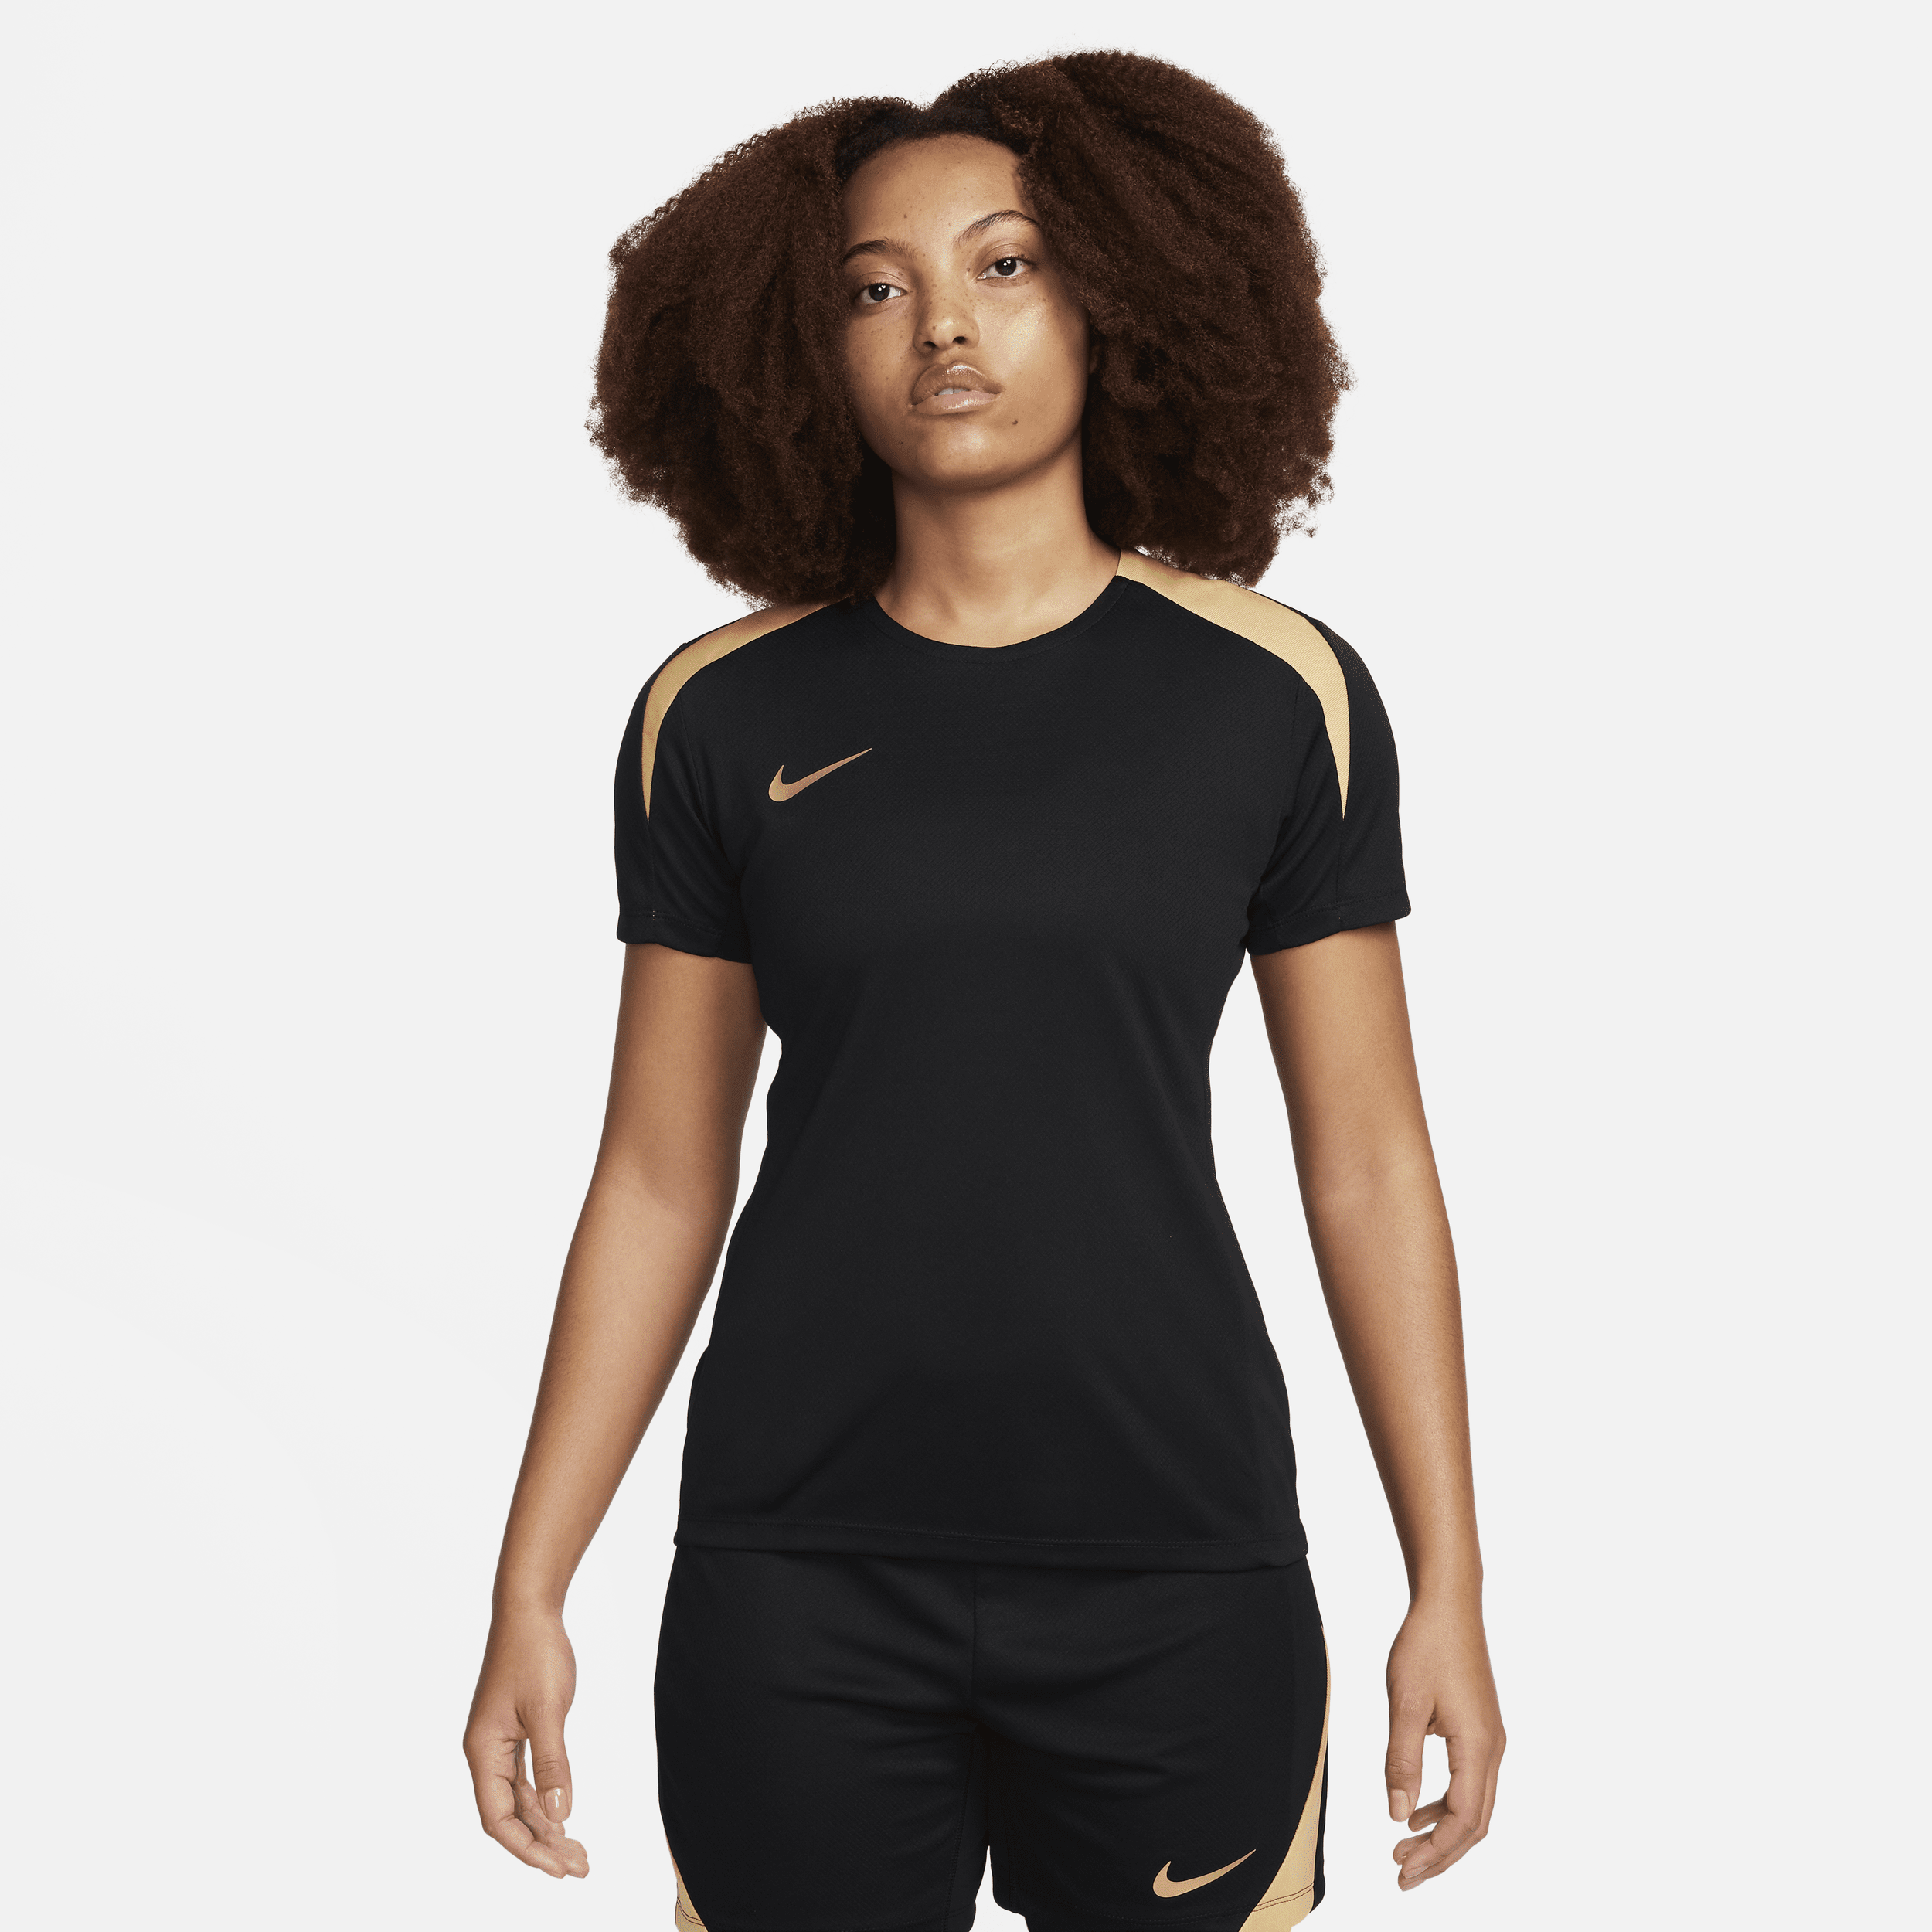 Nike Strike voetbaltop met Dri-FIT en korte mouwen voor dames - Zwart